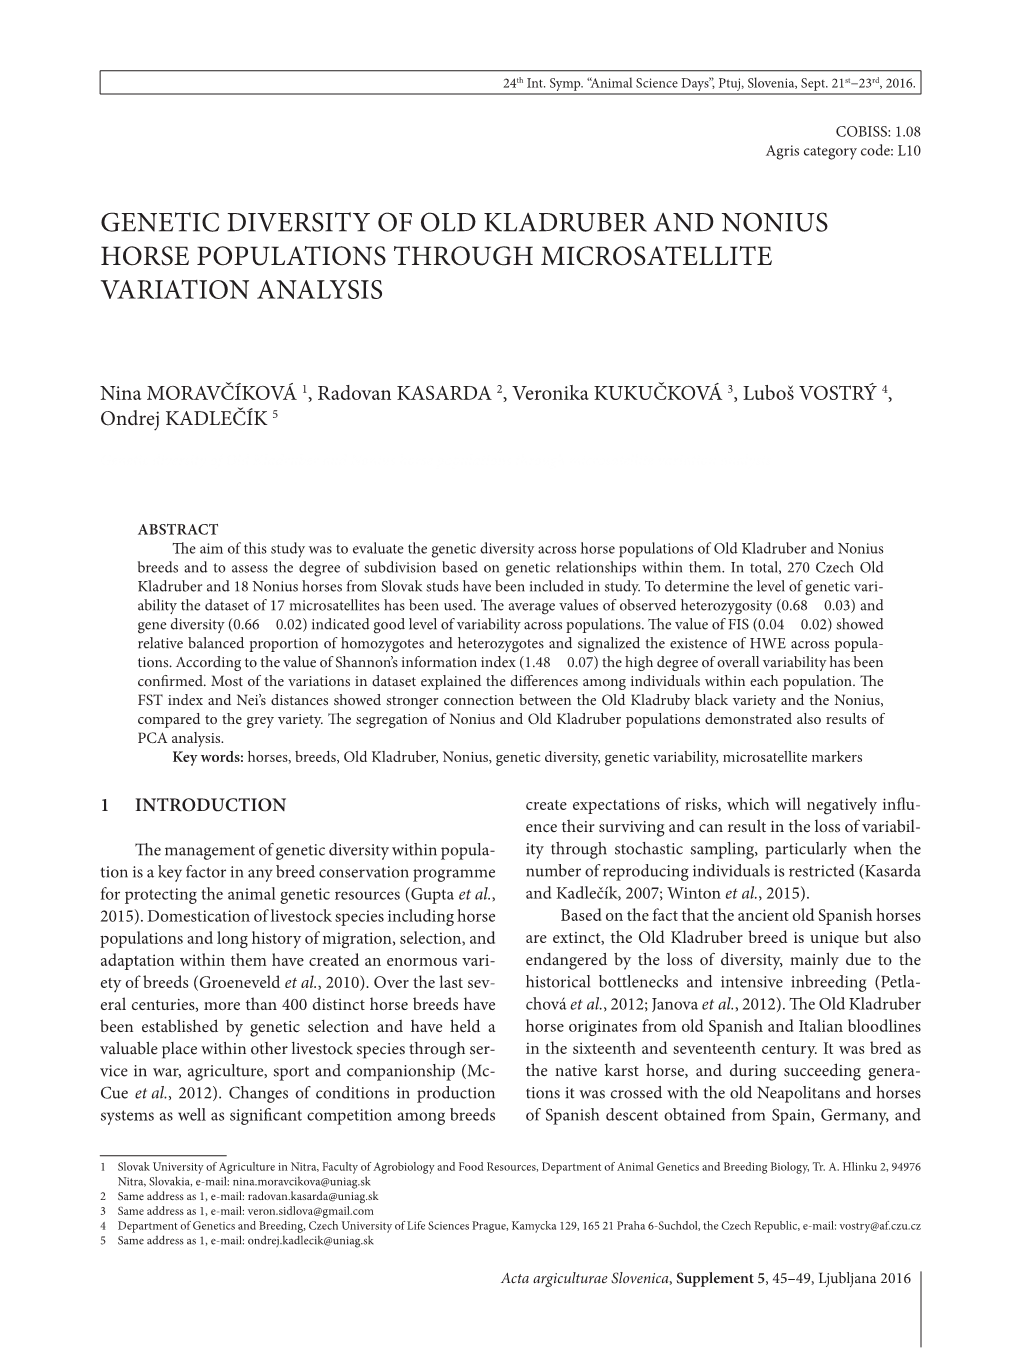 Genetic Diversity of Old Kladruber and Nonius Horse Populations Through Microsatellite Variation Analysis